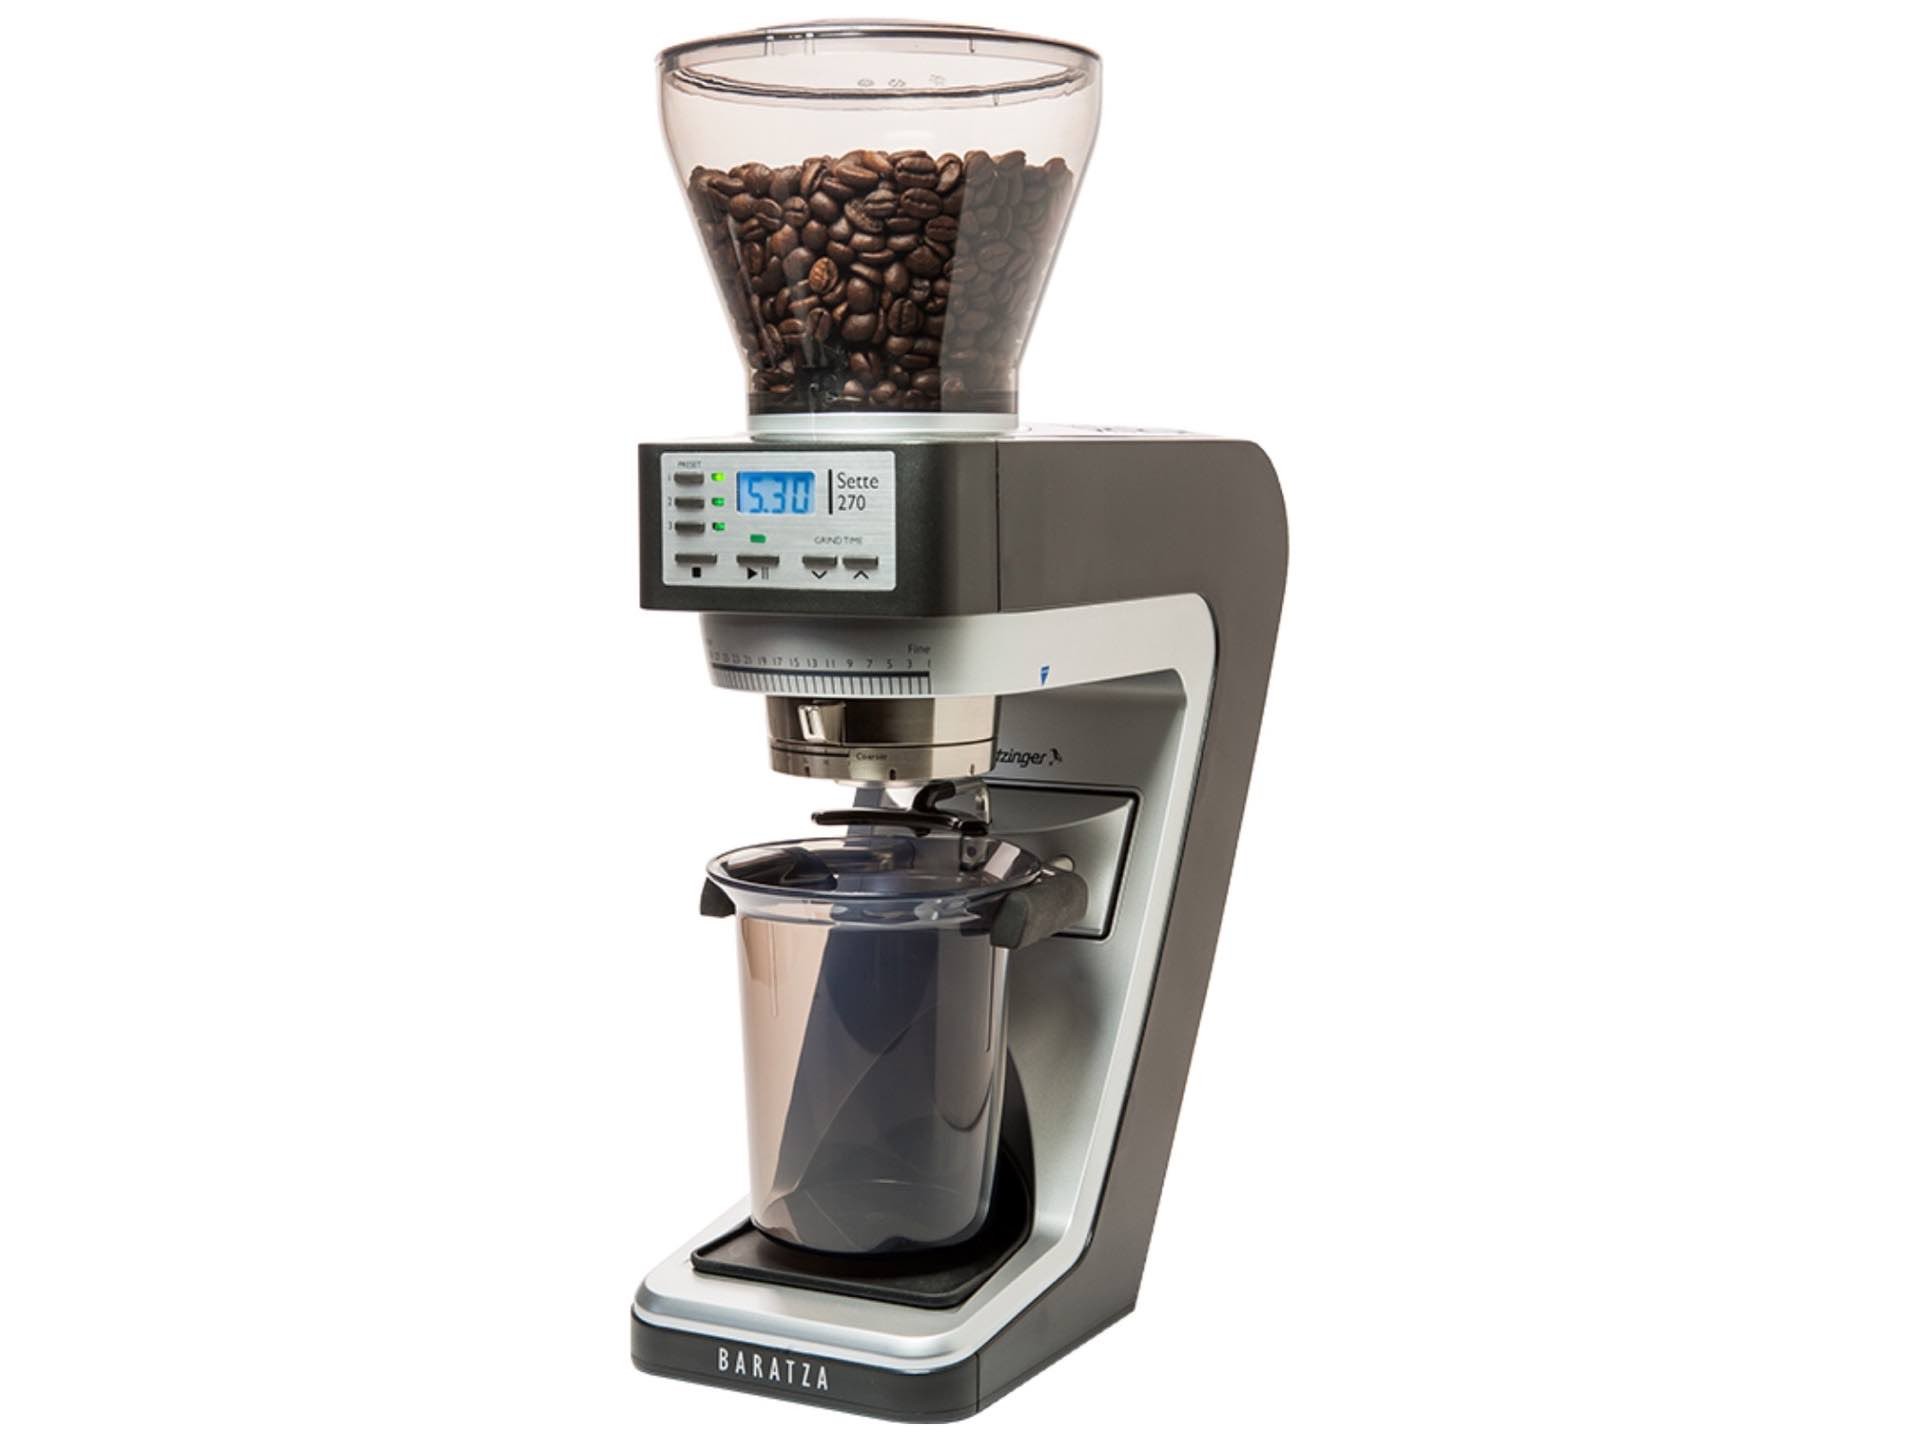 baratza-sette-270-espresso-grinder